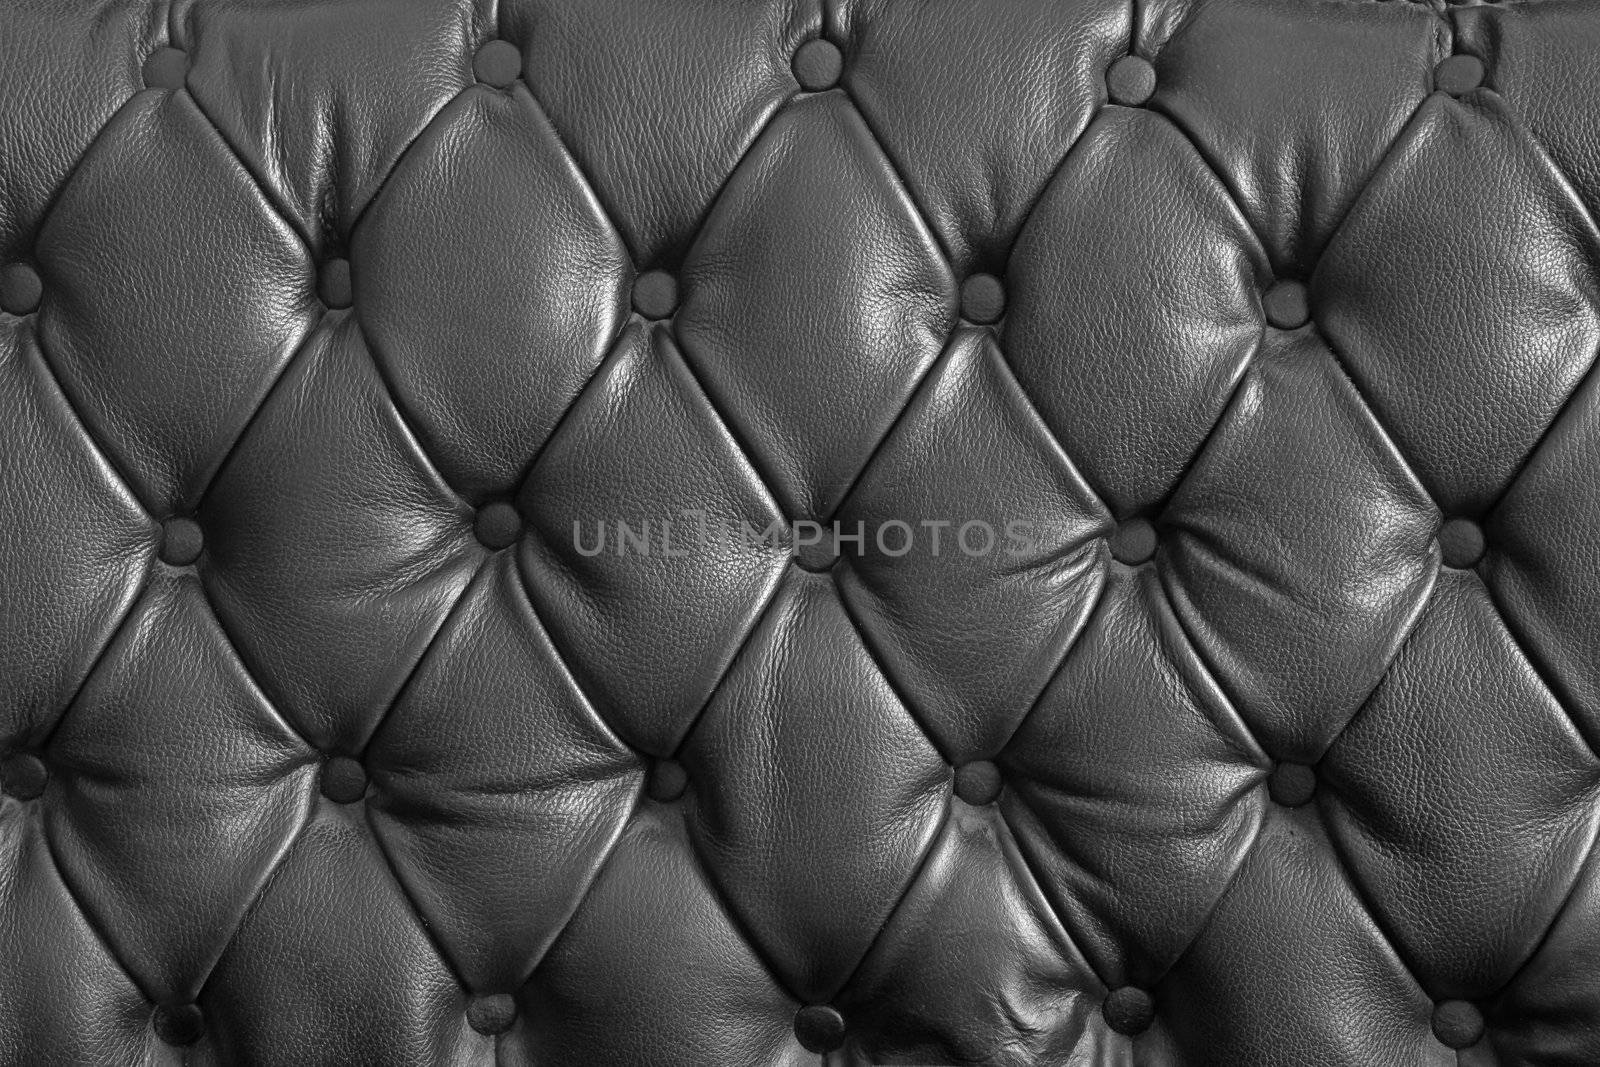 black genuine leather by vichie81